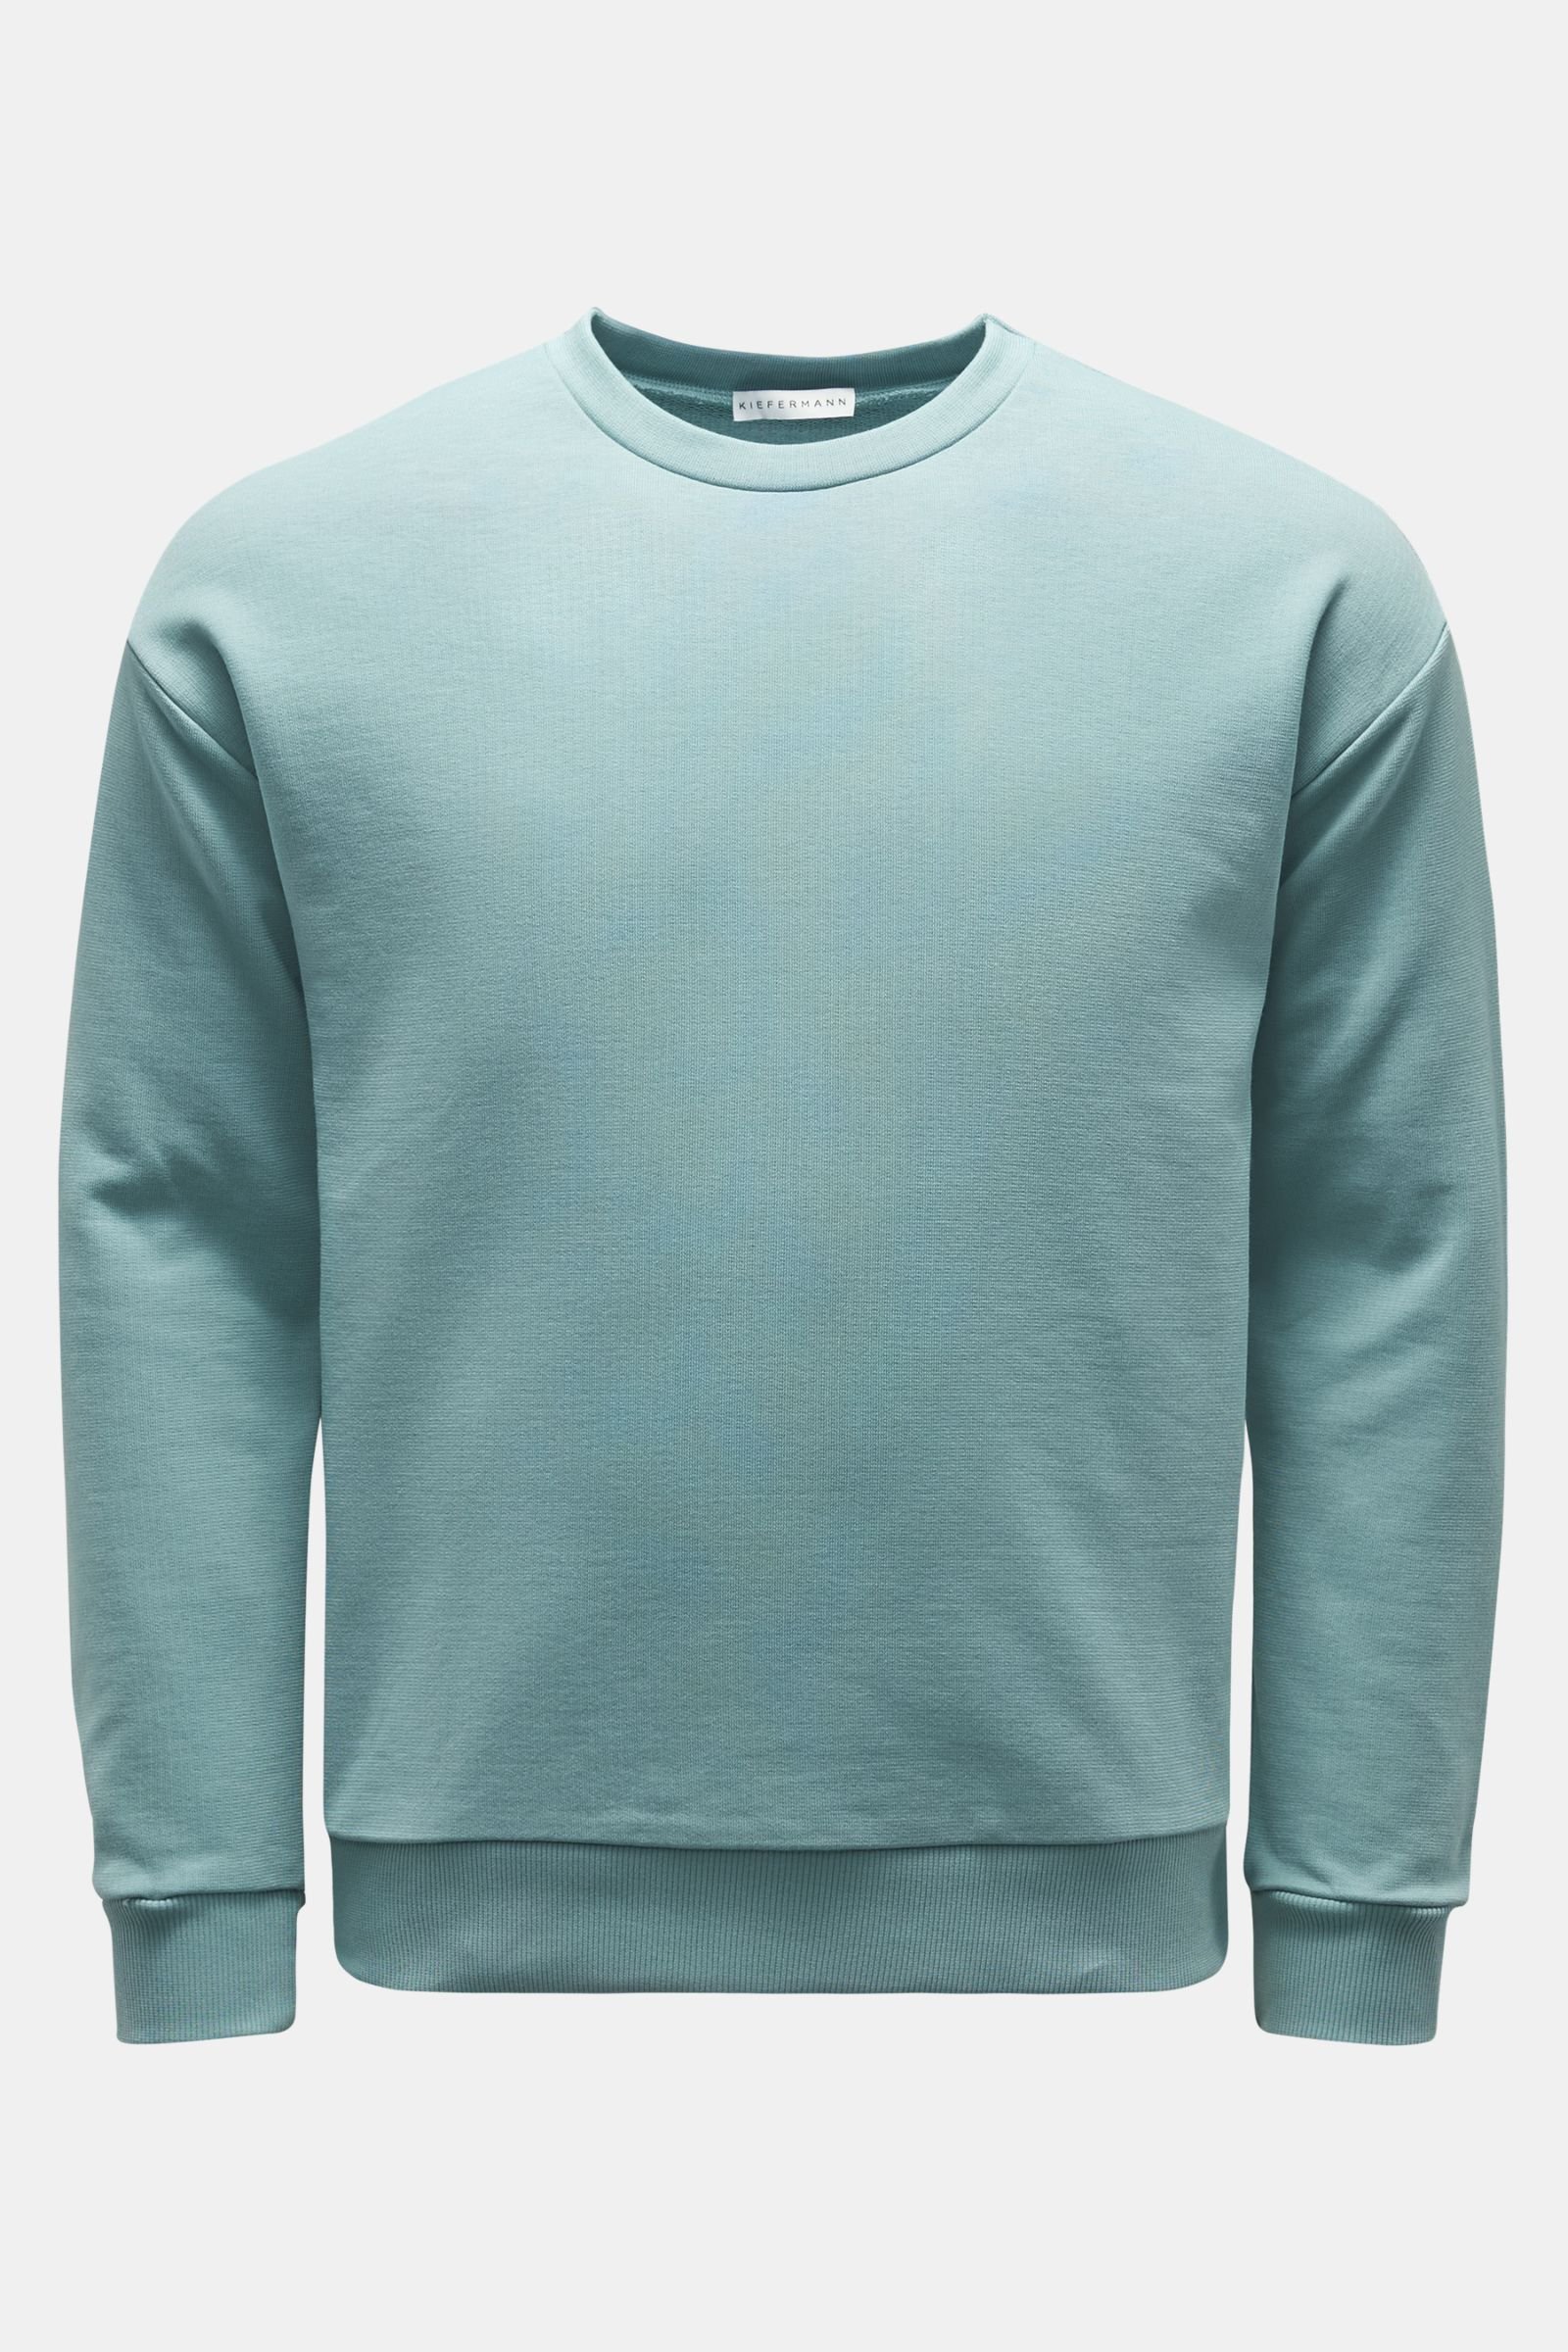 Crew neck sweatshirt 'Anselm' turquoise